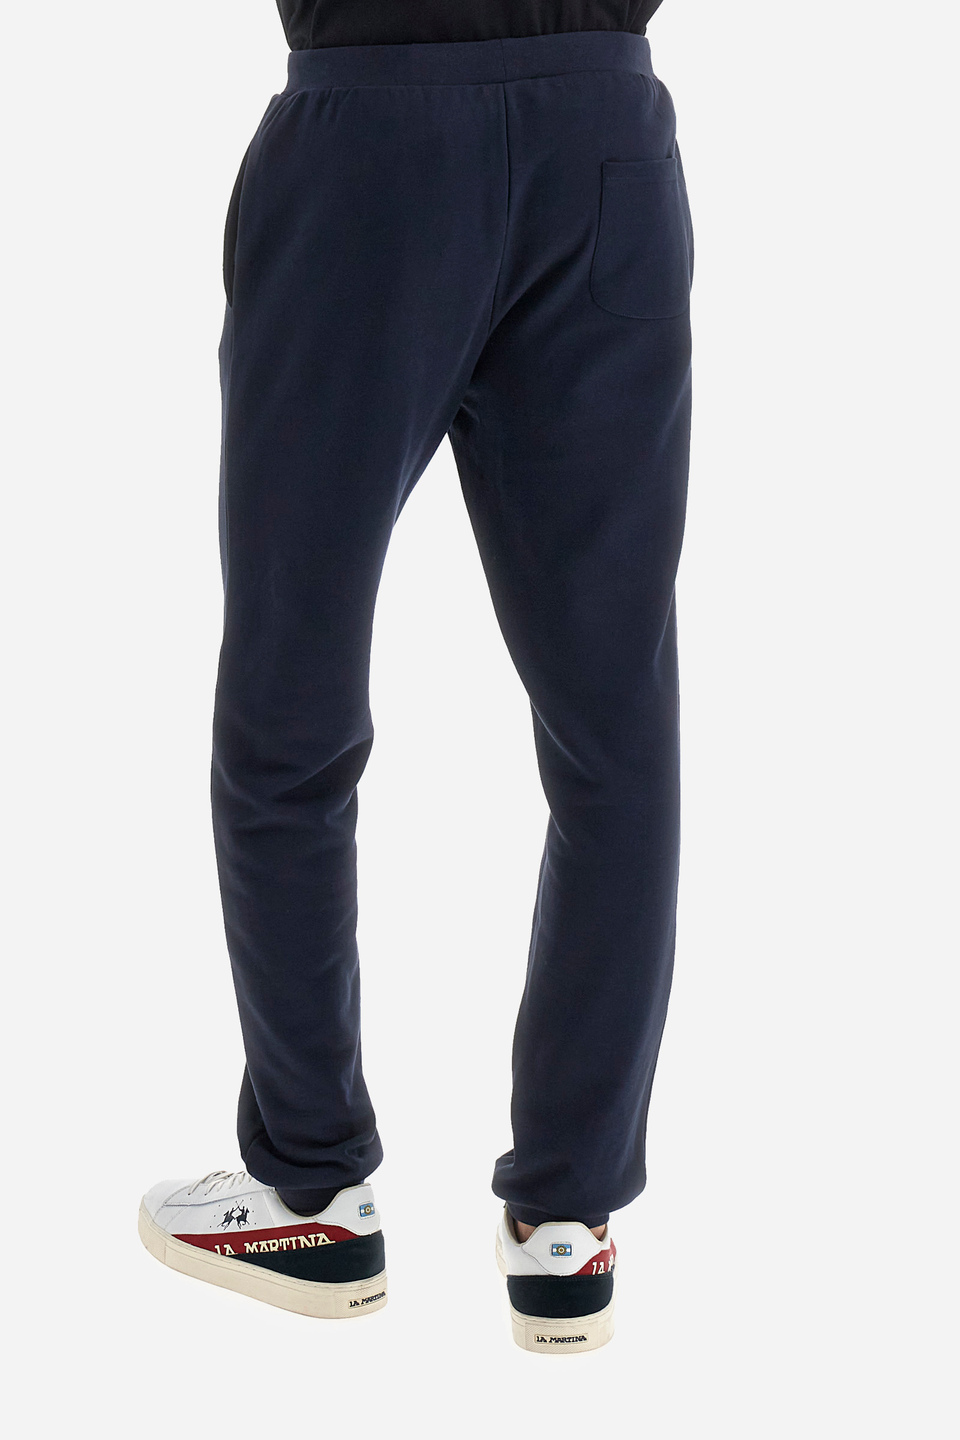 Men's jogging trousers in a regular fit - Welton | La Martina - Official Online Shop